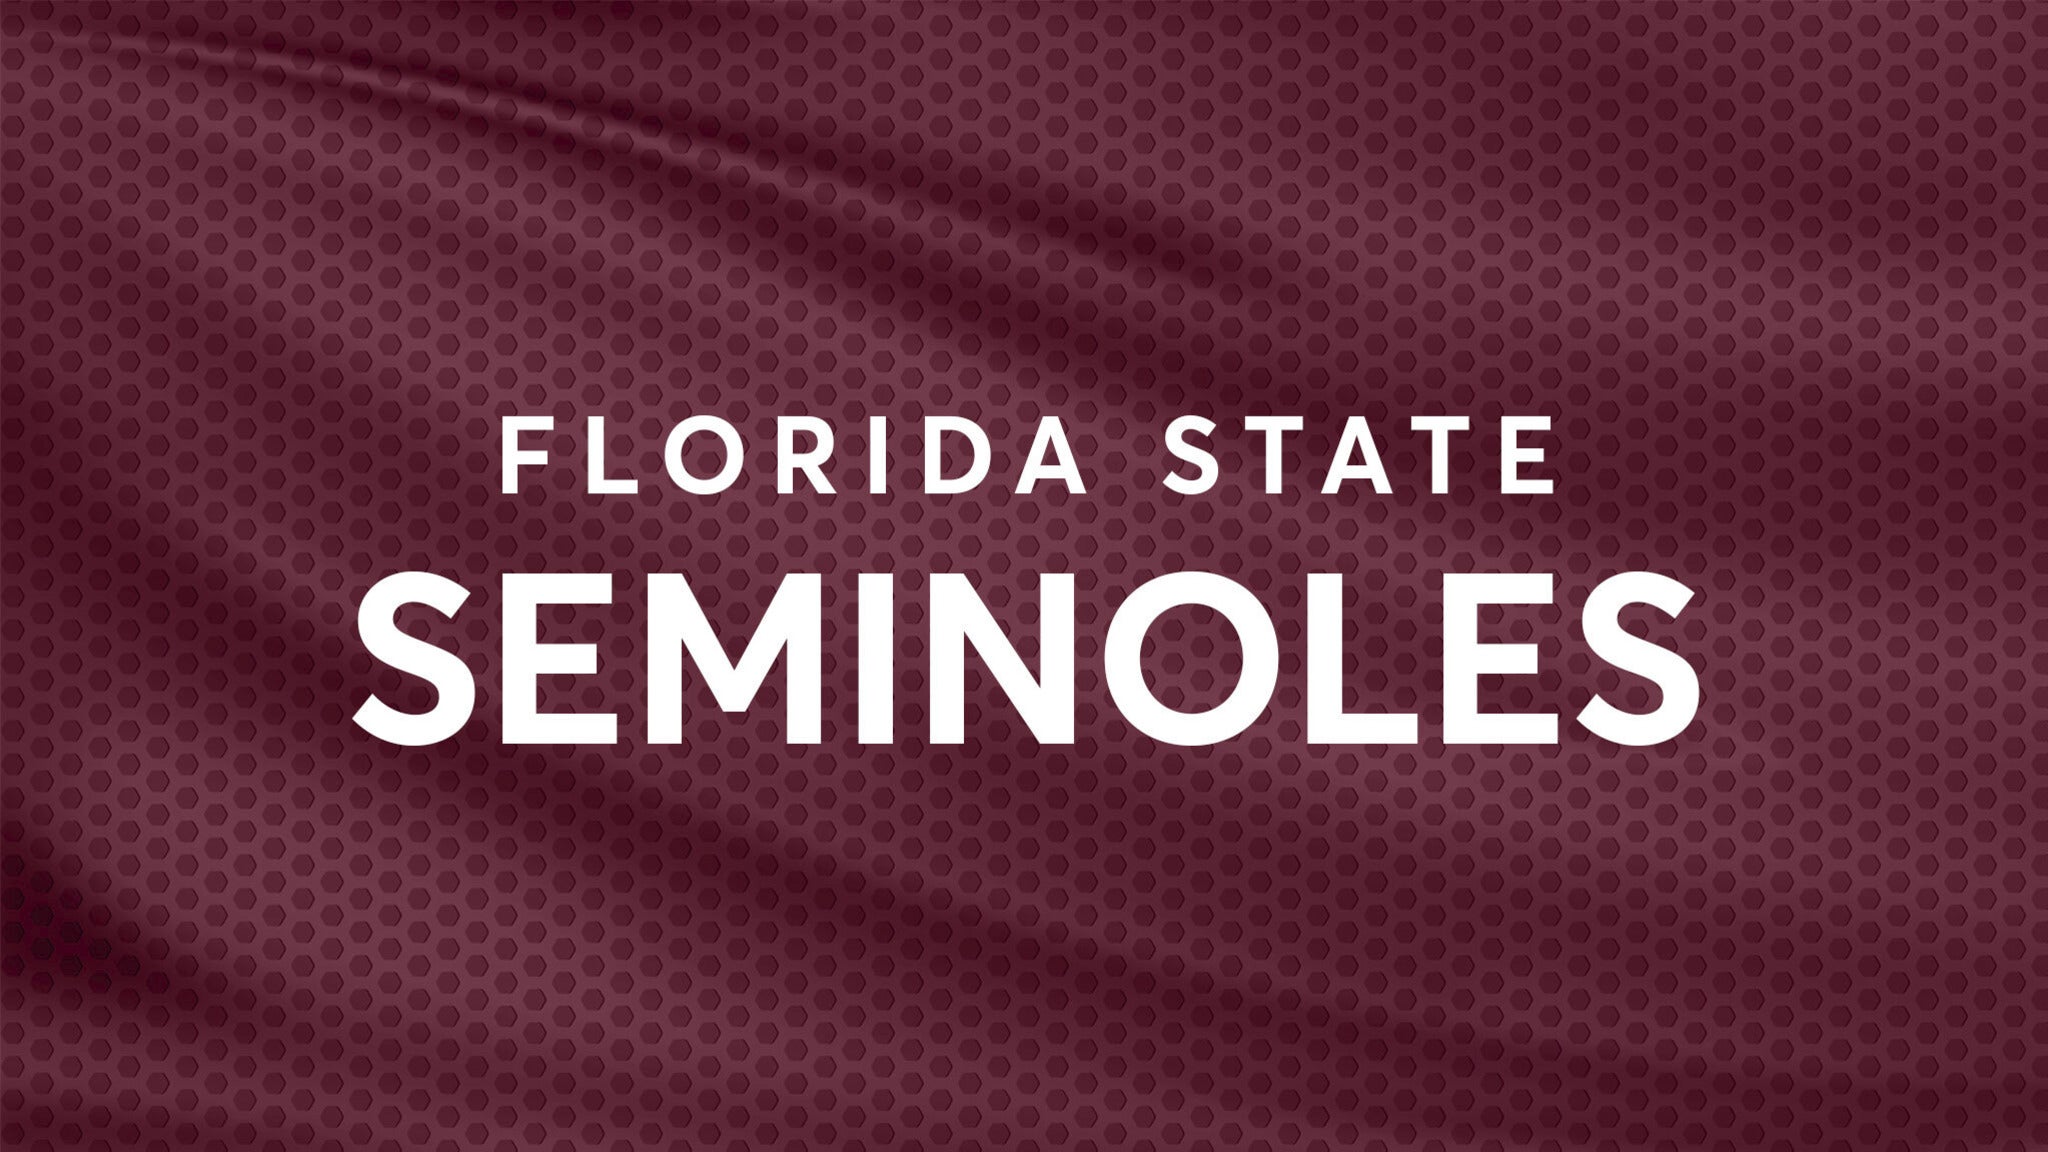 Florida State Seminoles Football at Doak Campbell Stadium